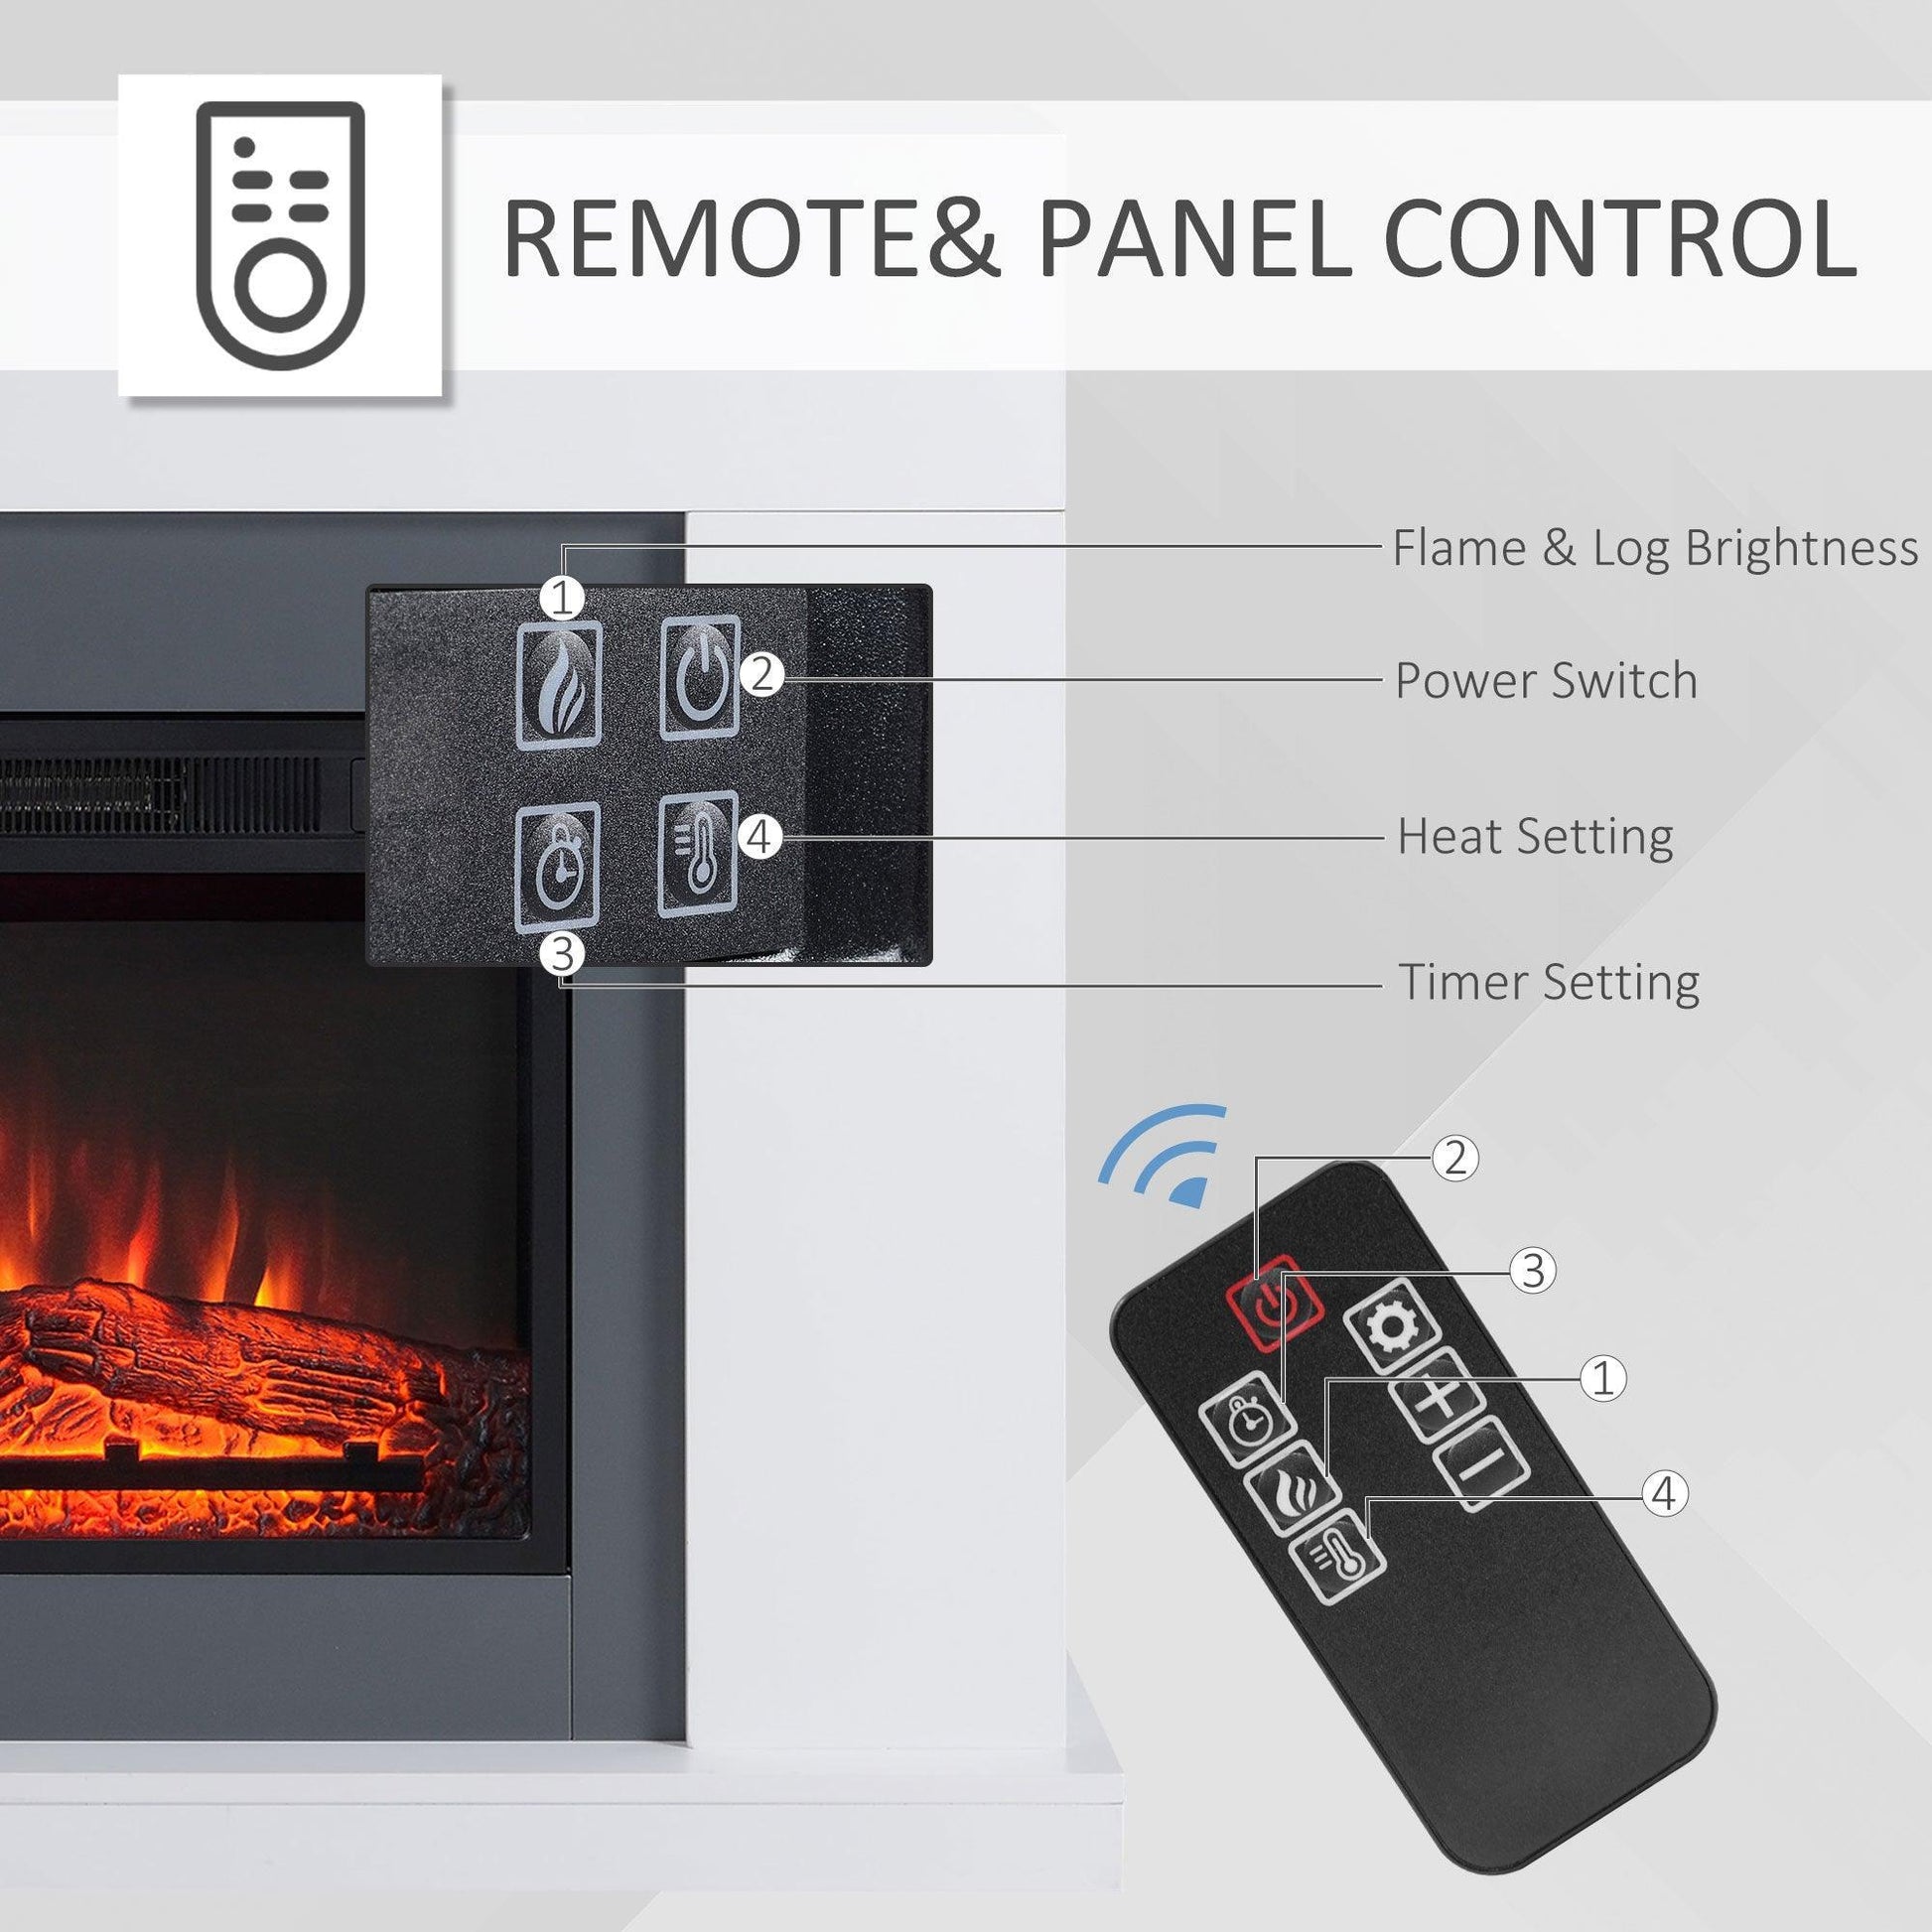 HOMCOM Electric Fireplace with Remote Control, 2000W Heater - ALL4U RETAILER LTD